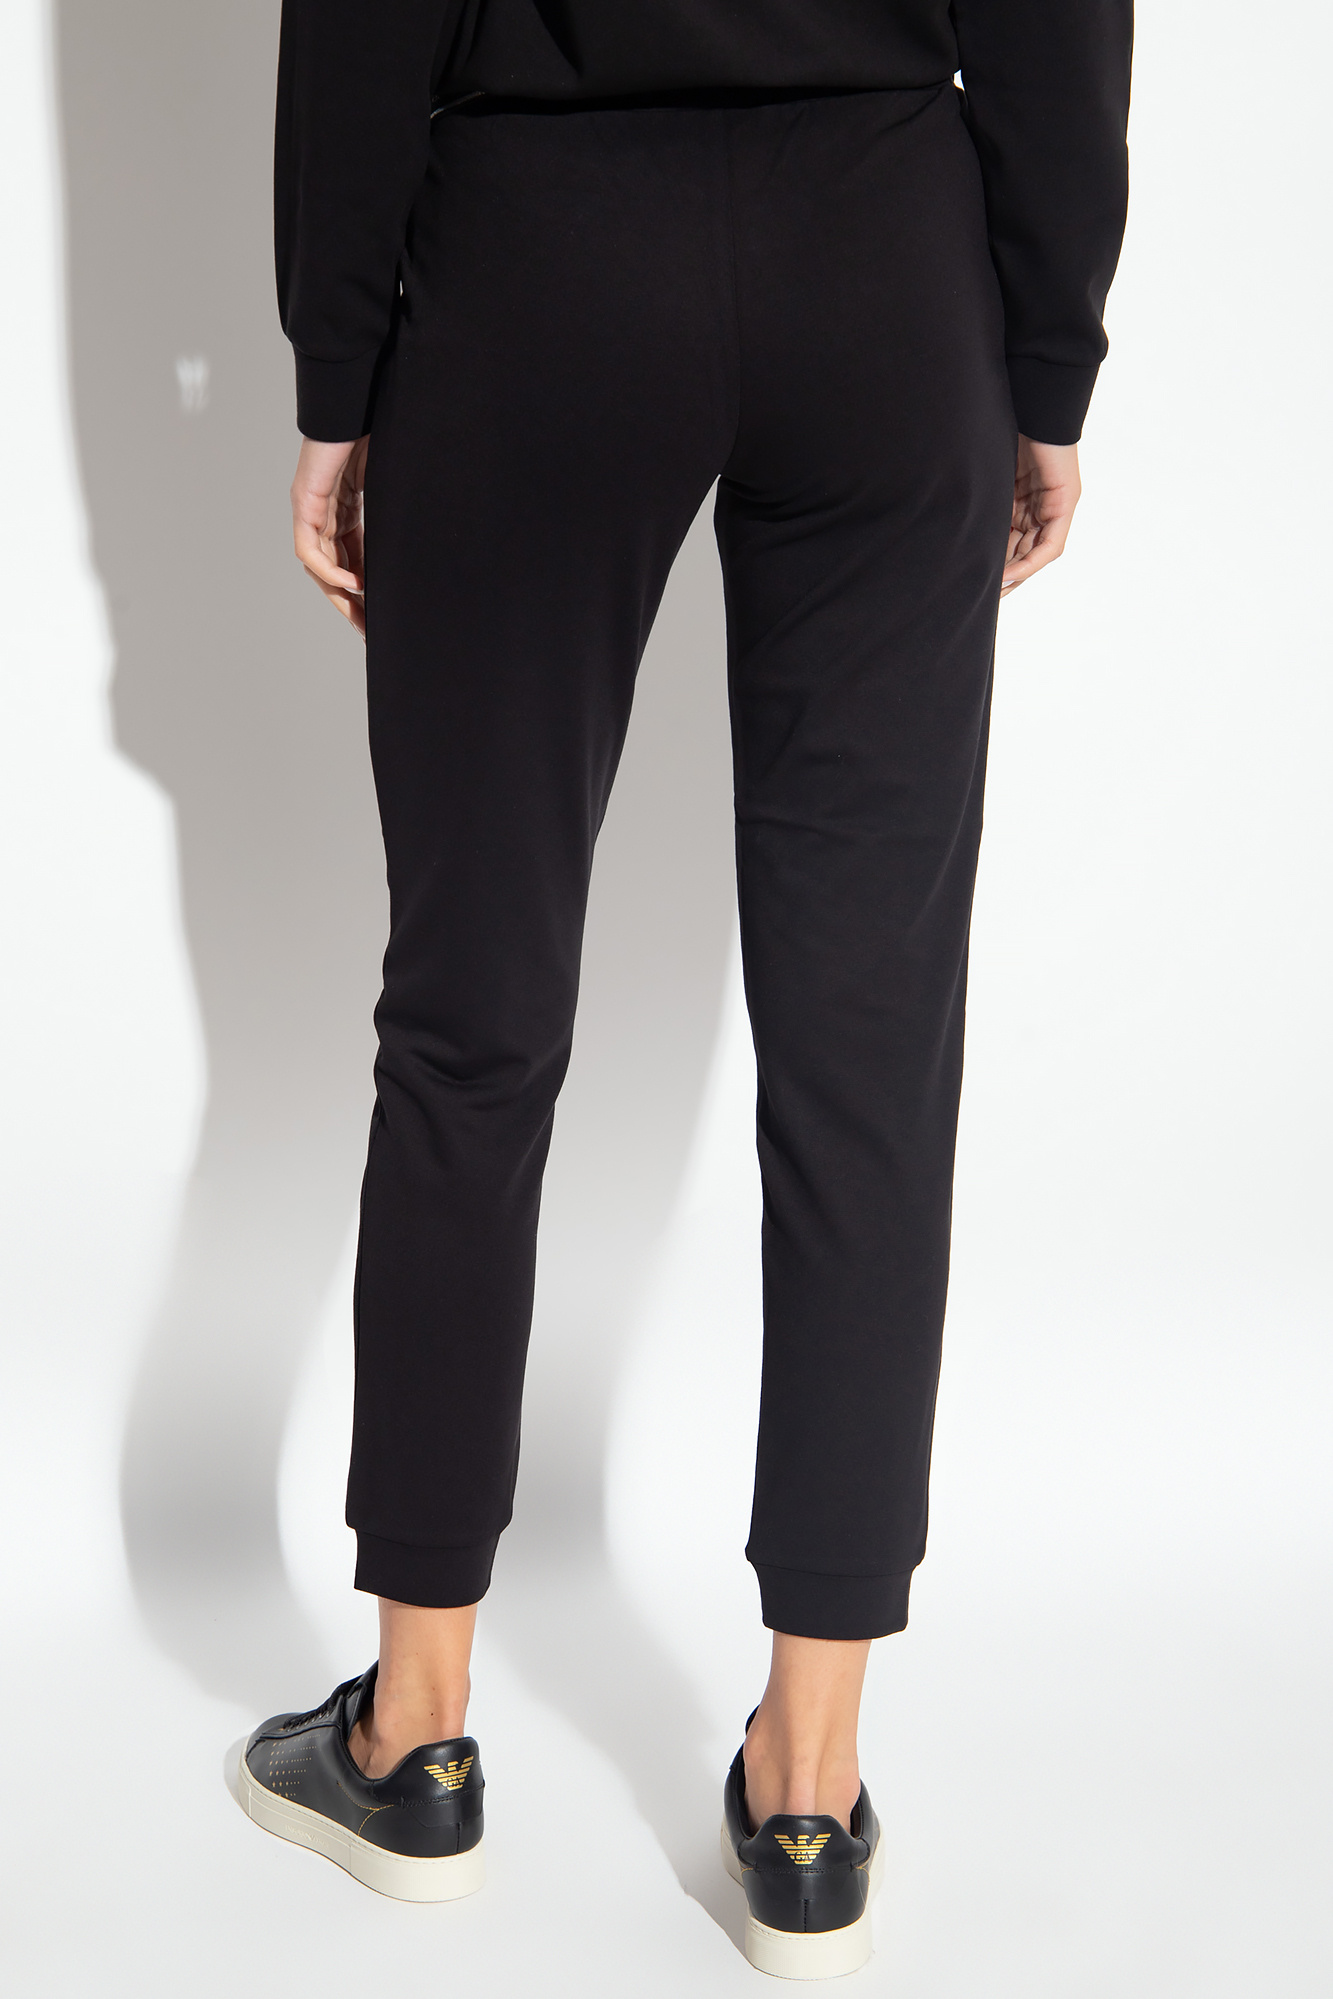 EA7 Emporio Armani Sweatpants with logo, Women's Clothing